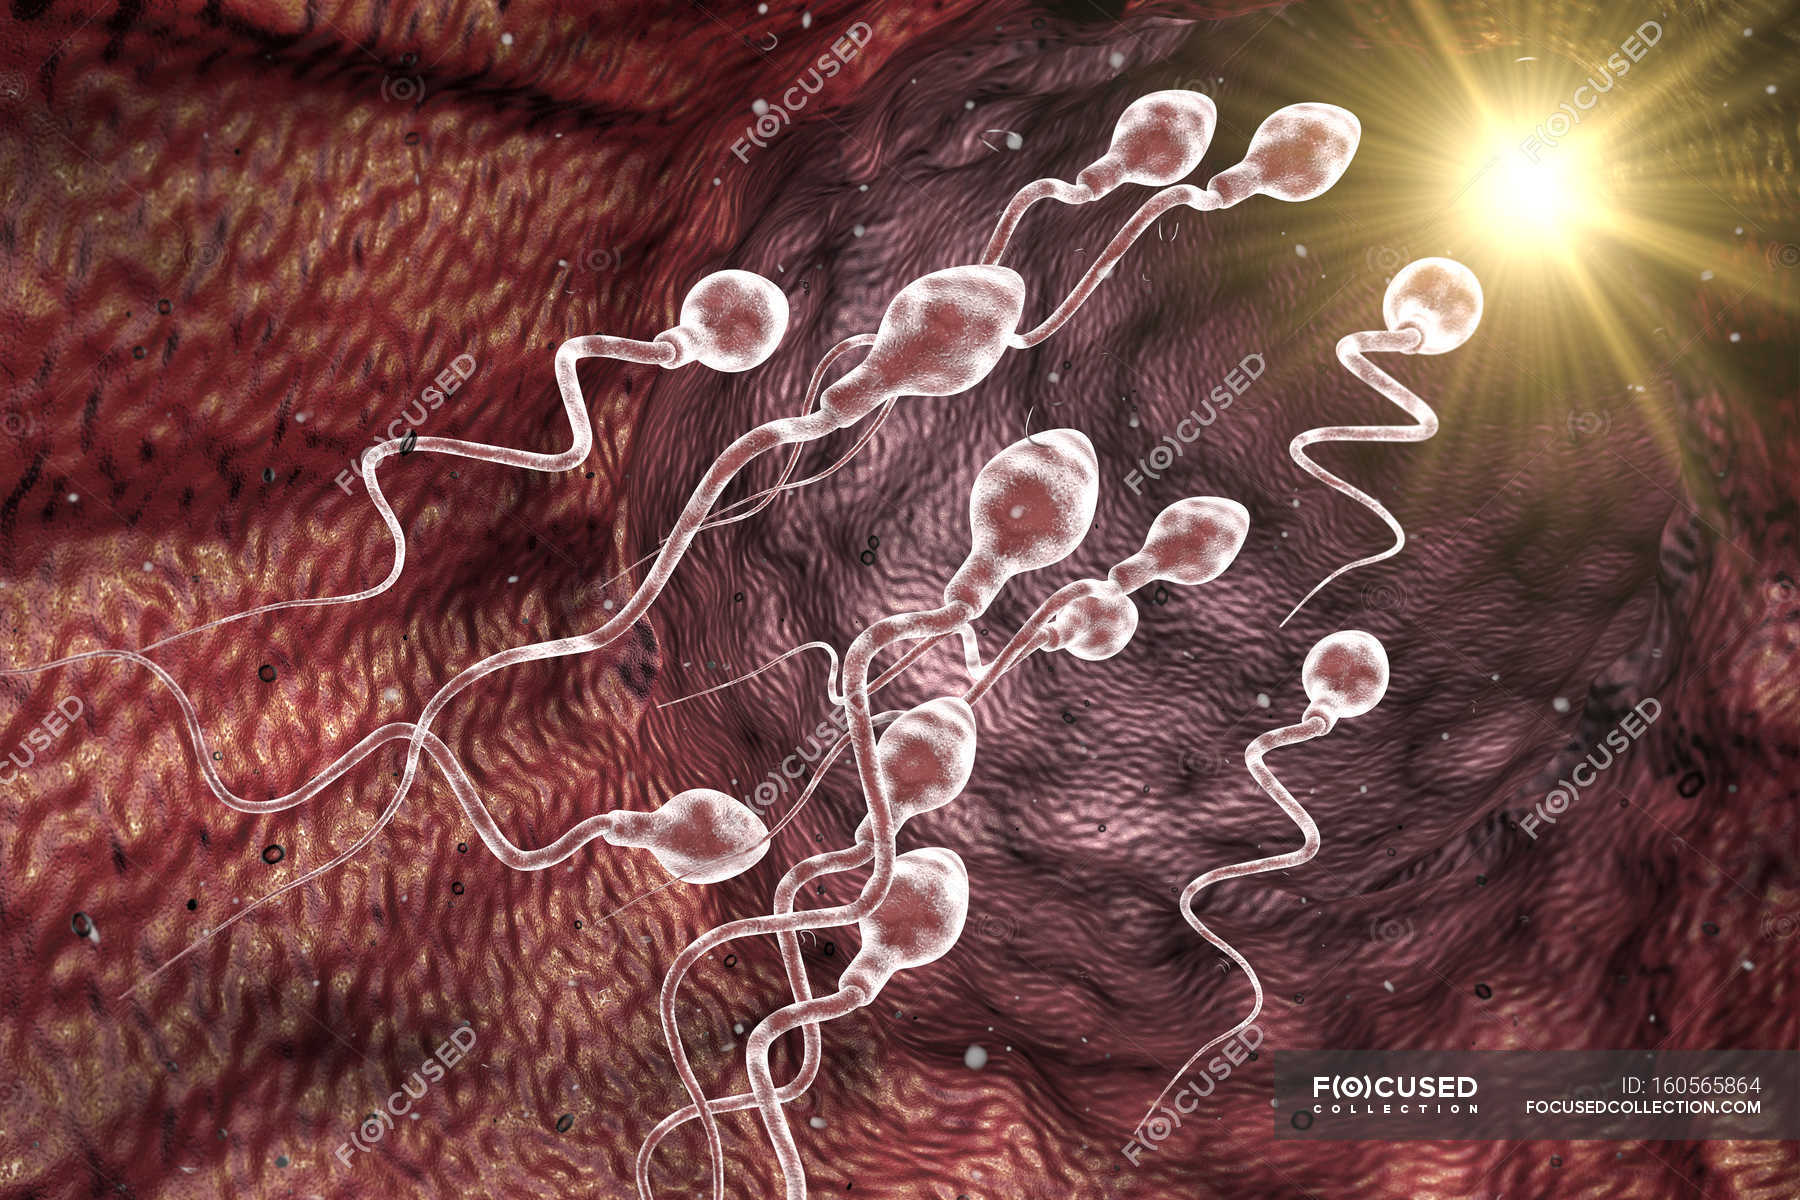 видео как проходит сперма в матку фото 57